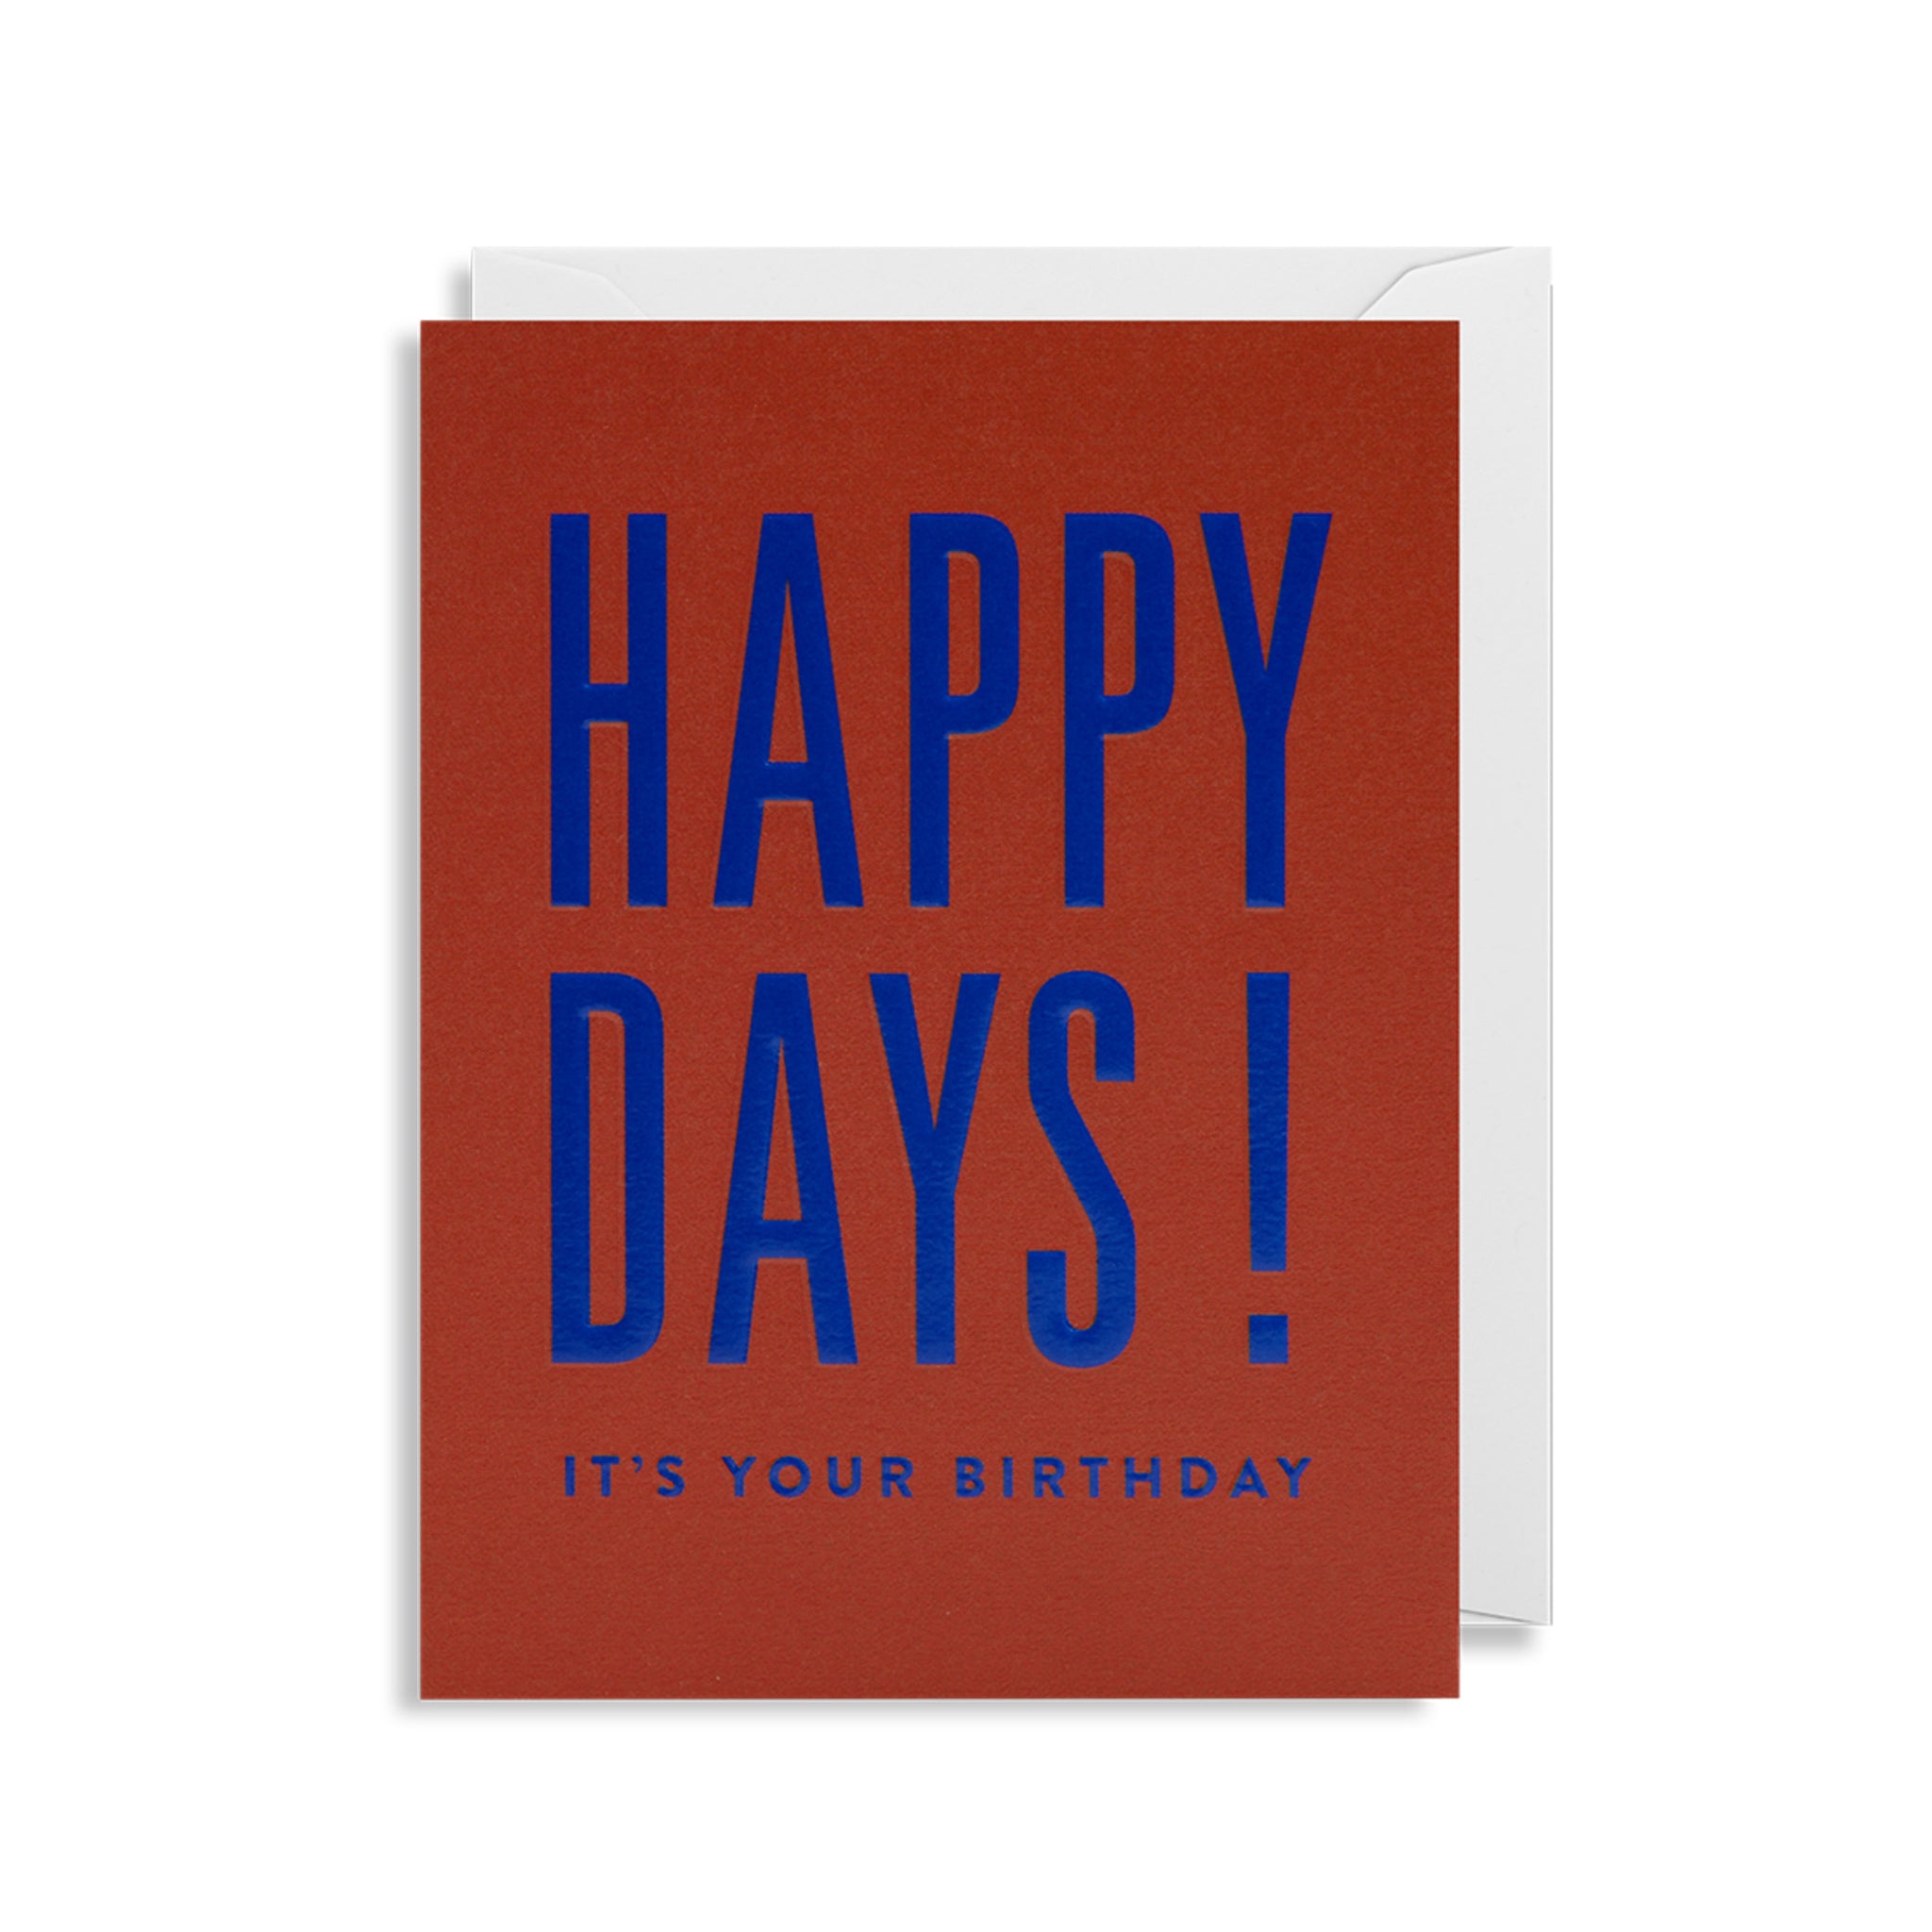 Happy Days! It's Your Birthday - Mini Card